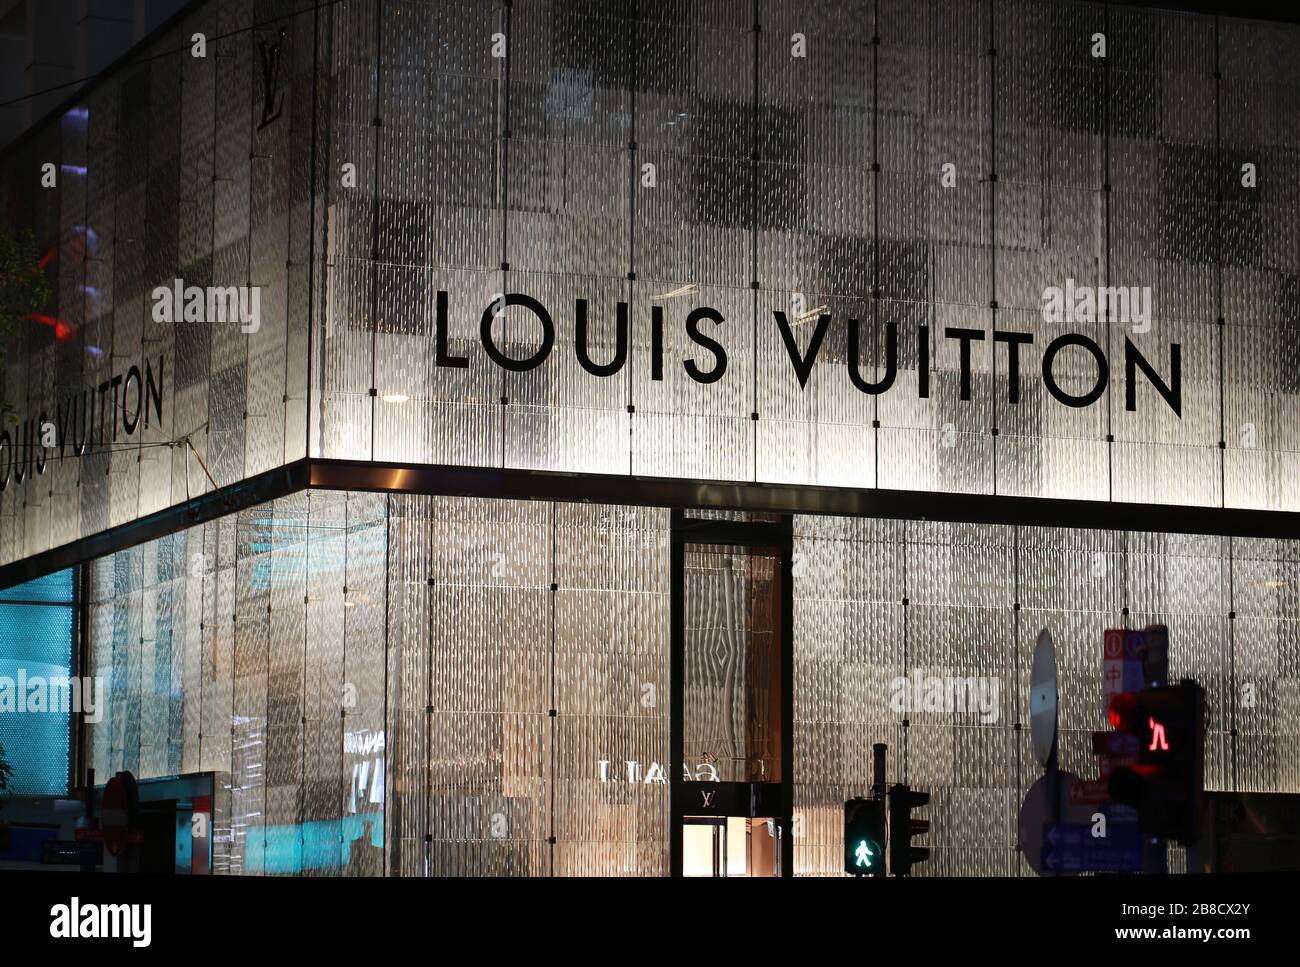 Louis Vuitton Hong Kong Flagship Store 